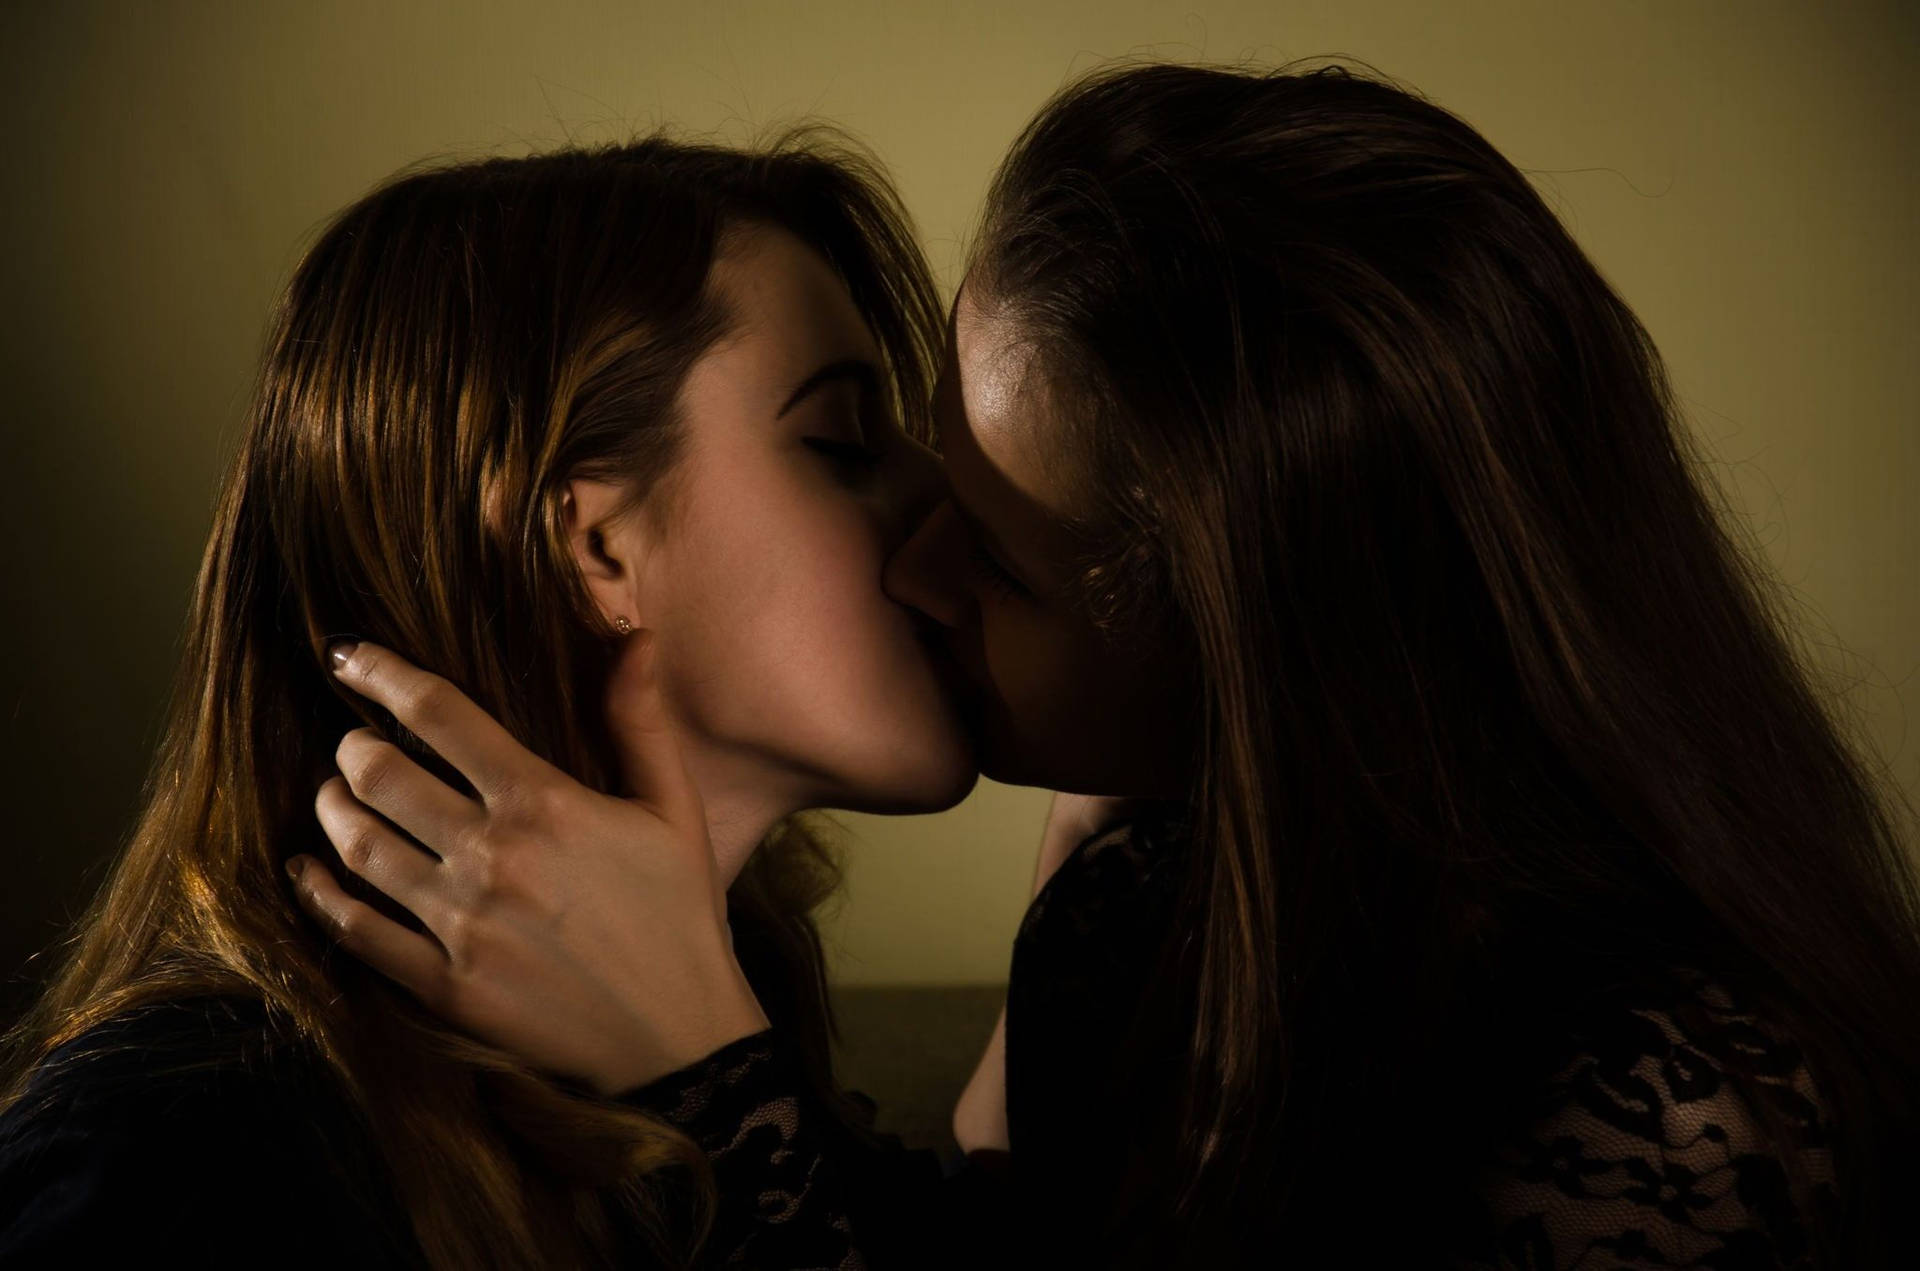 Girls Kissing At Night Wallpaper